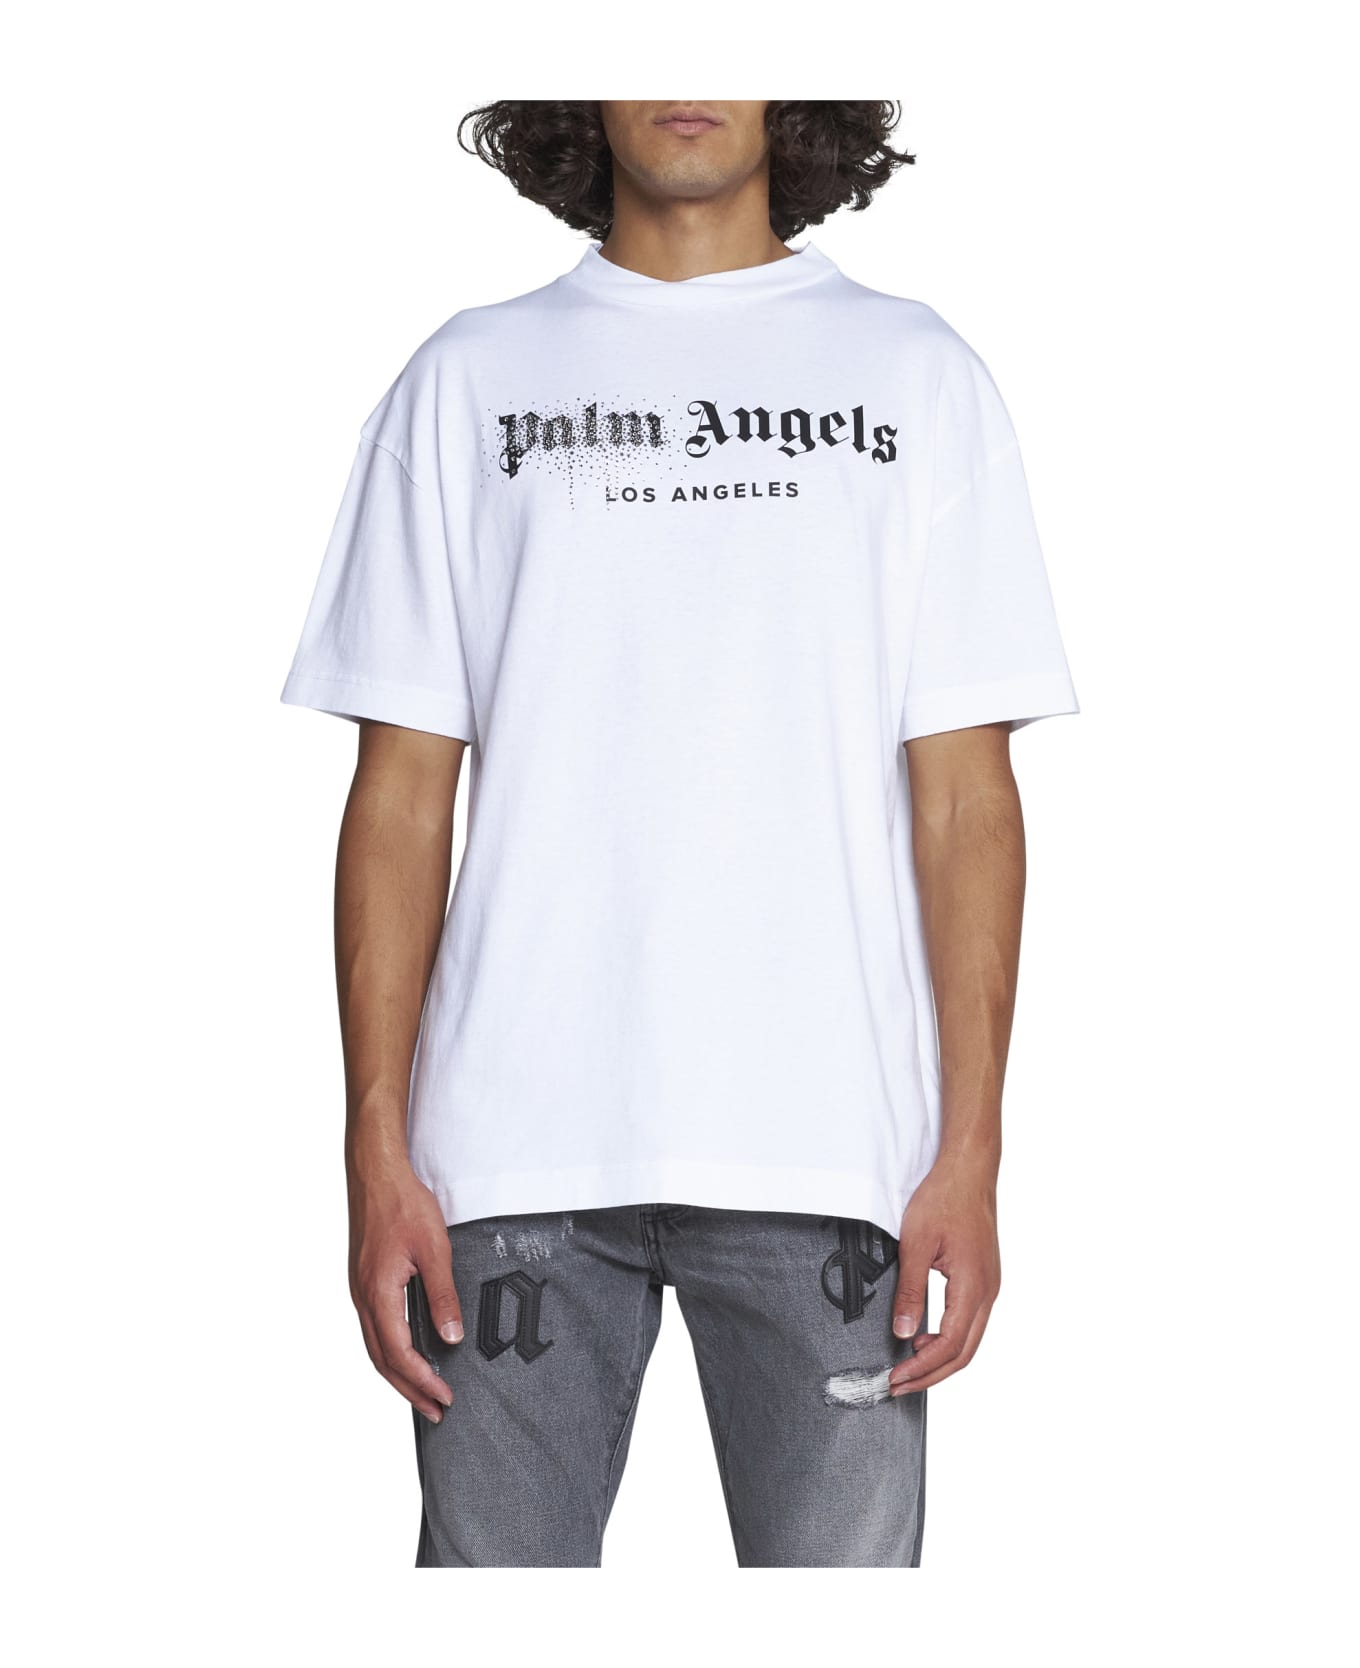 Palm Angels T-Shirt - White BLACK